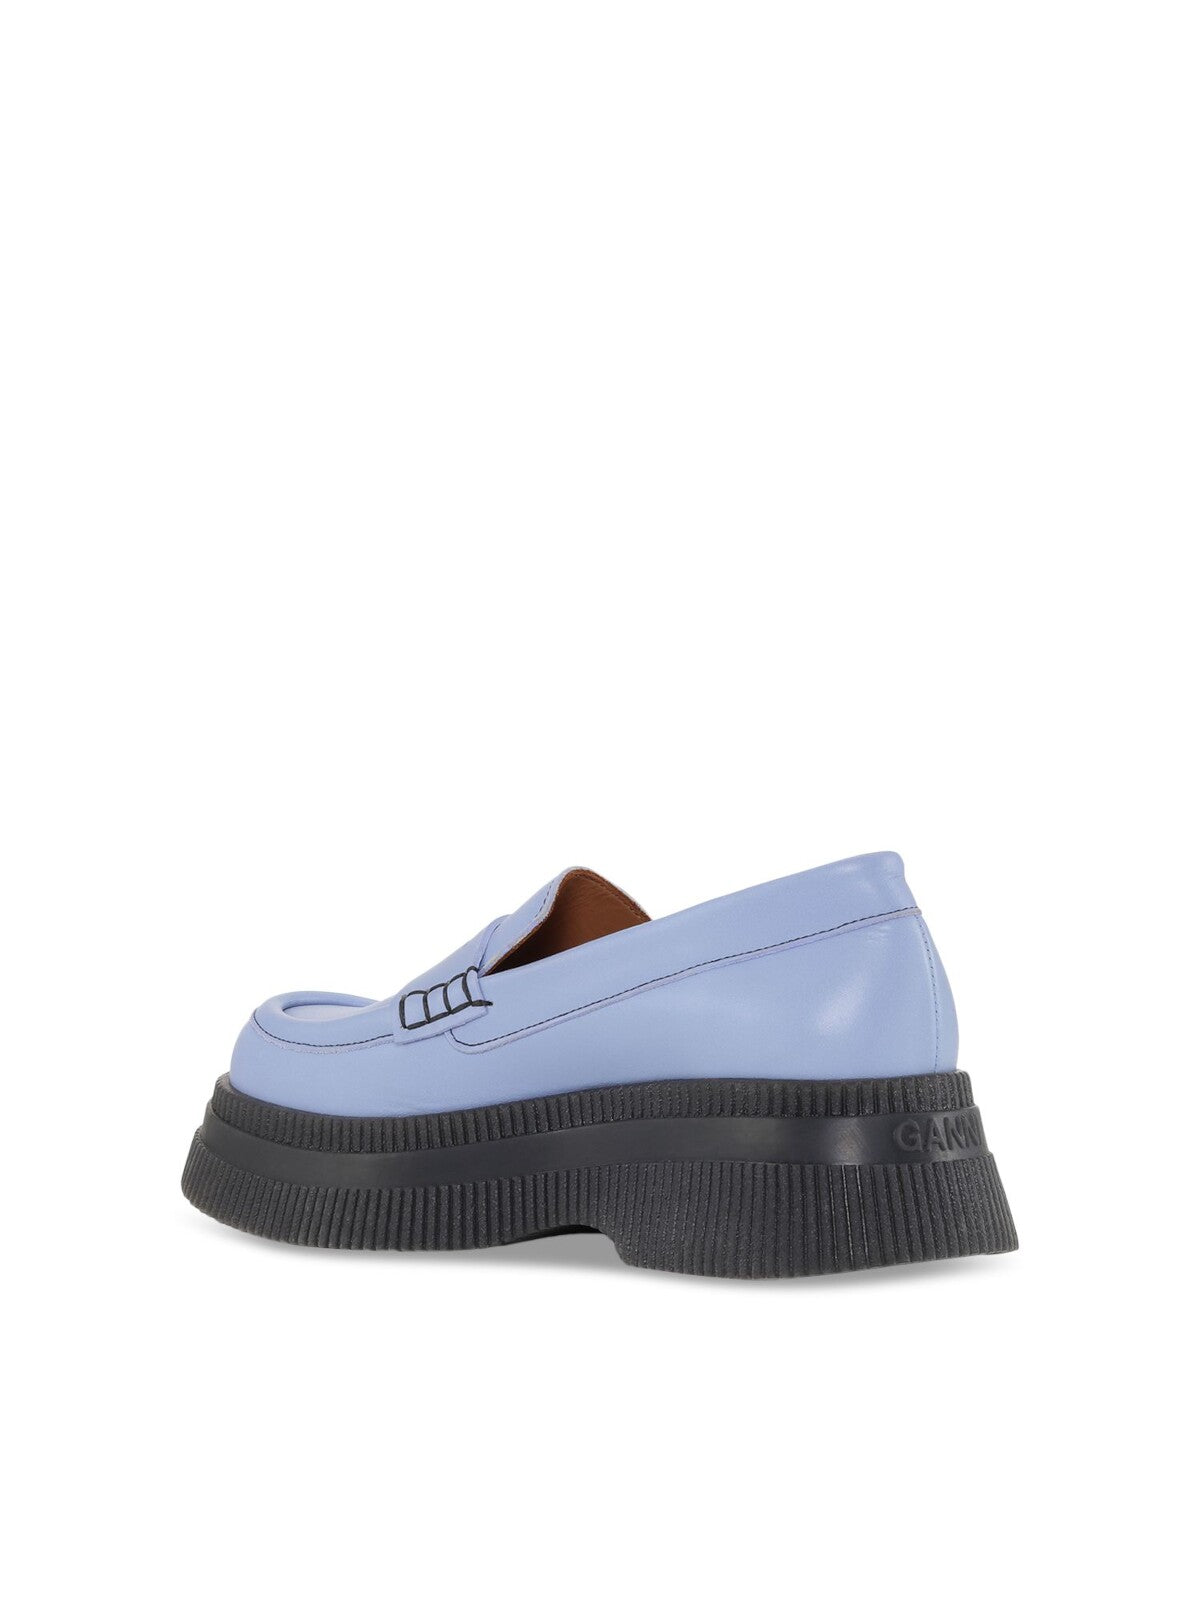 GANNI Womens Light Blue 2" Platform Comfort Creepers Round Toe Block Heel Slip On Leather Dress Heeled Loafers 39